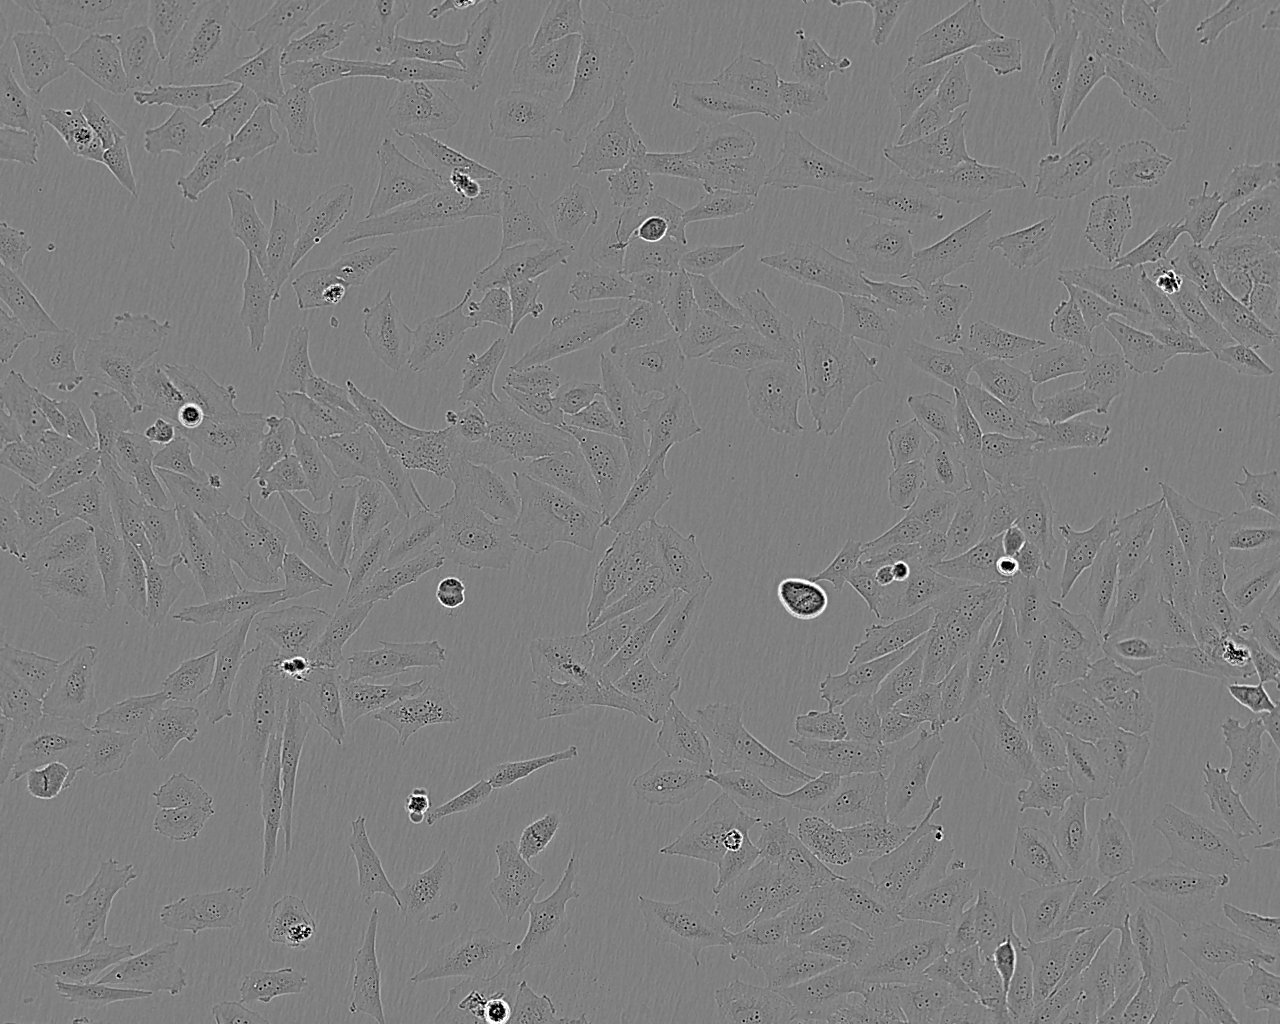 SK-LU-1 epithelioid cells人低分化肺腺癌细胞系,SK-LU-1 epithelioid cells